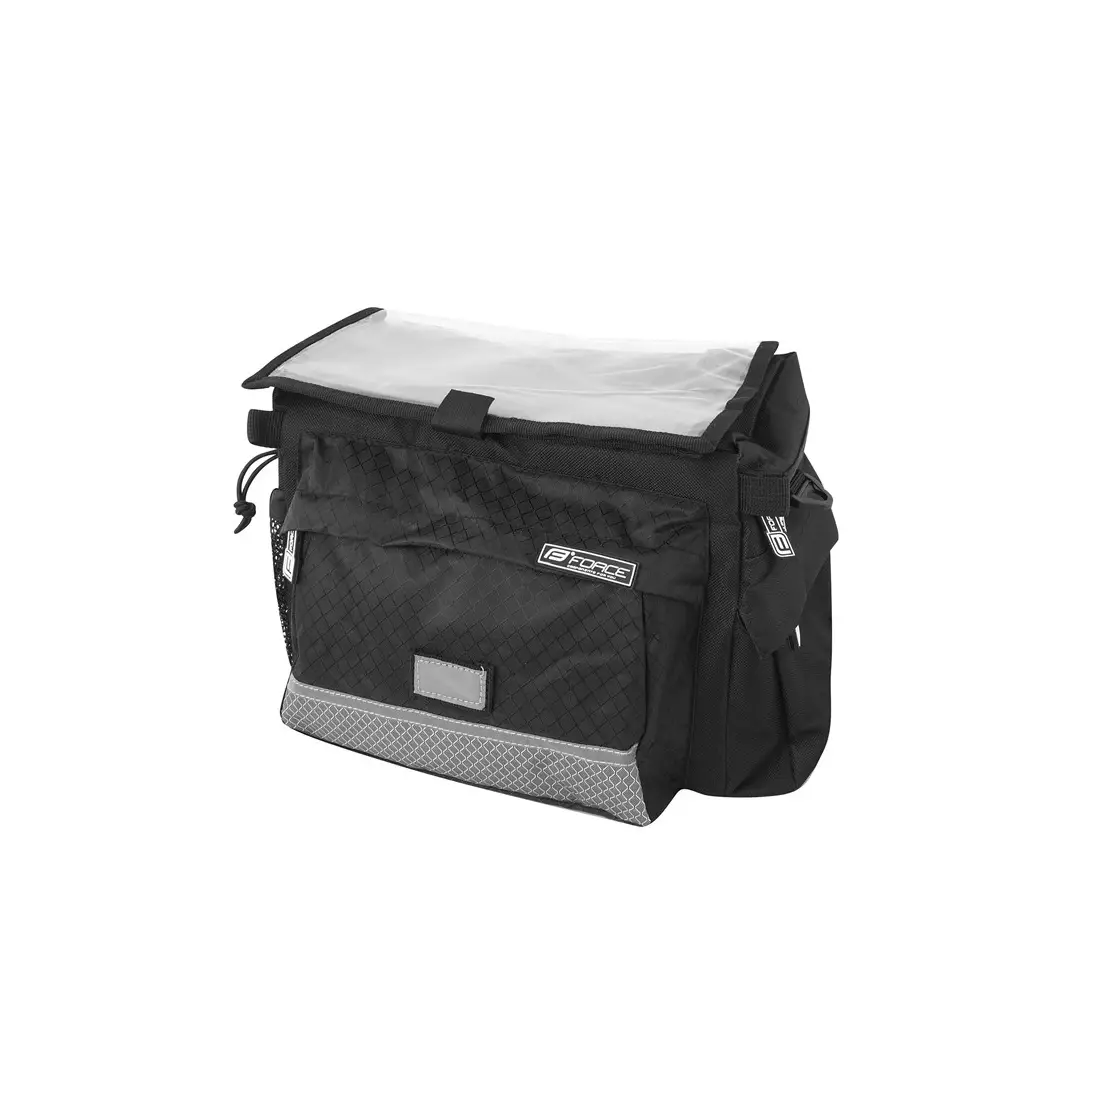 FORCE 896359 handlebar bag NEKY, black